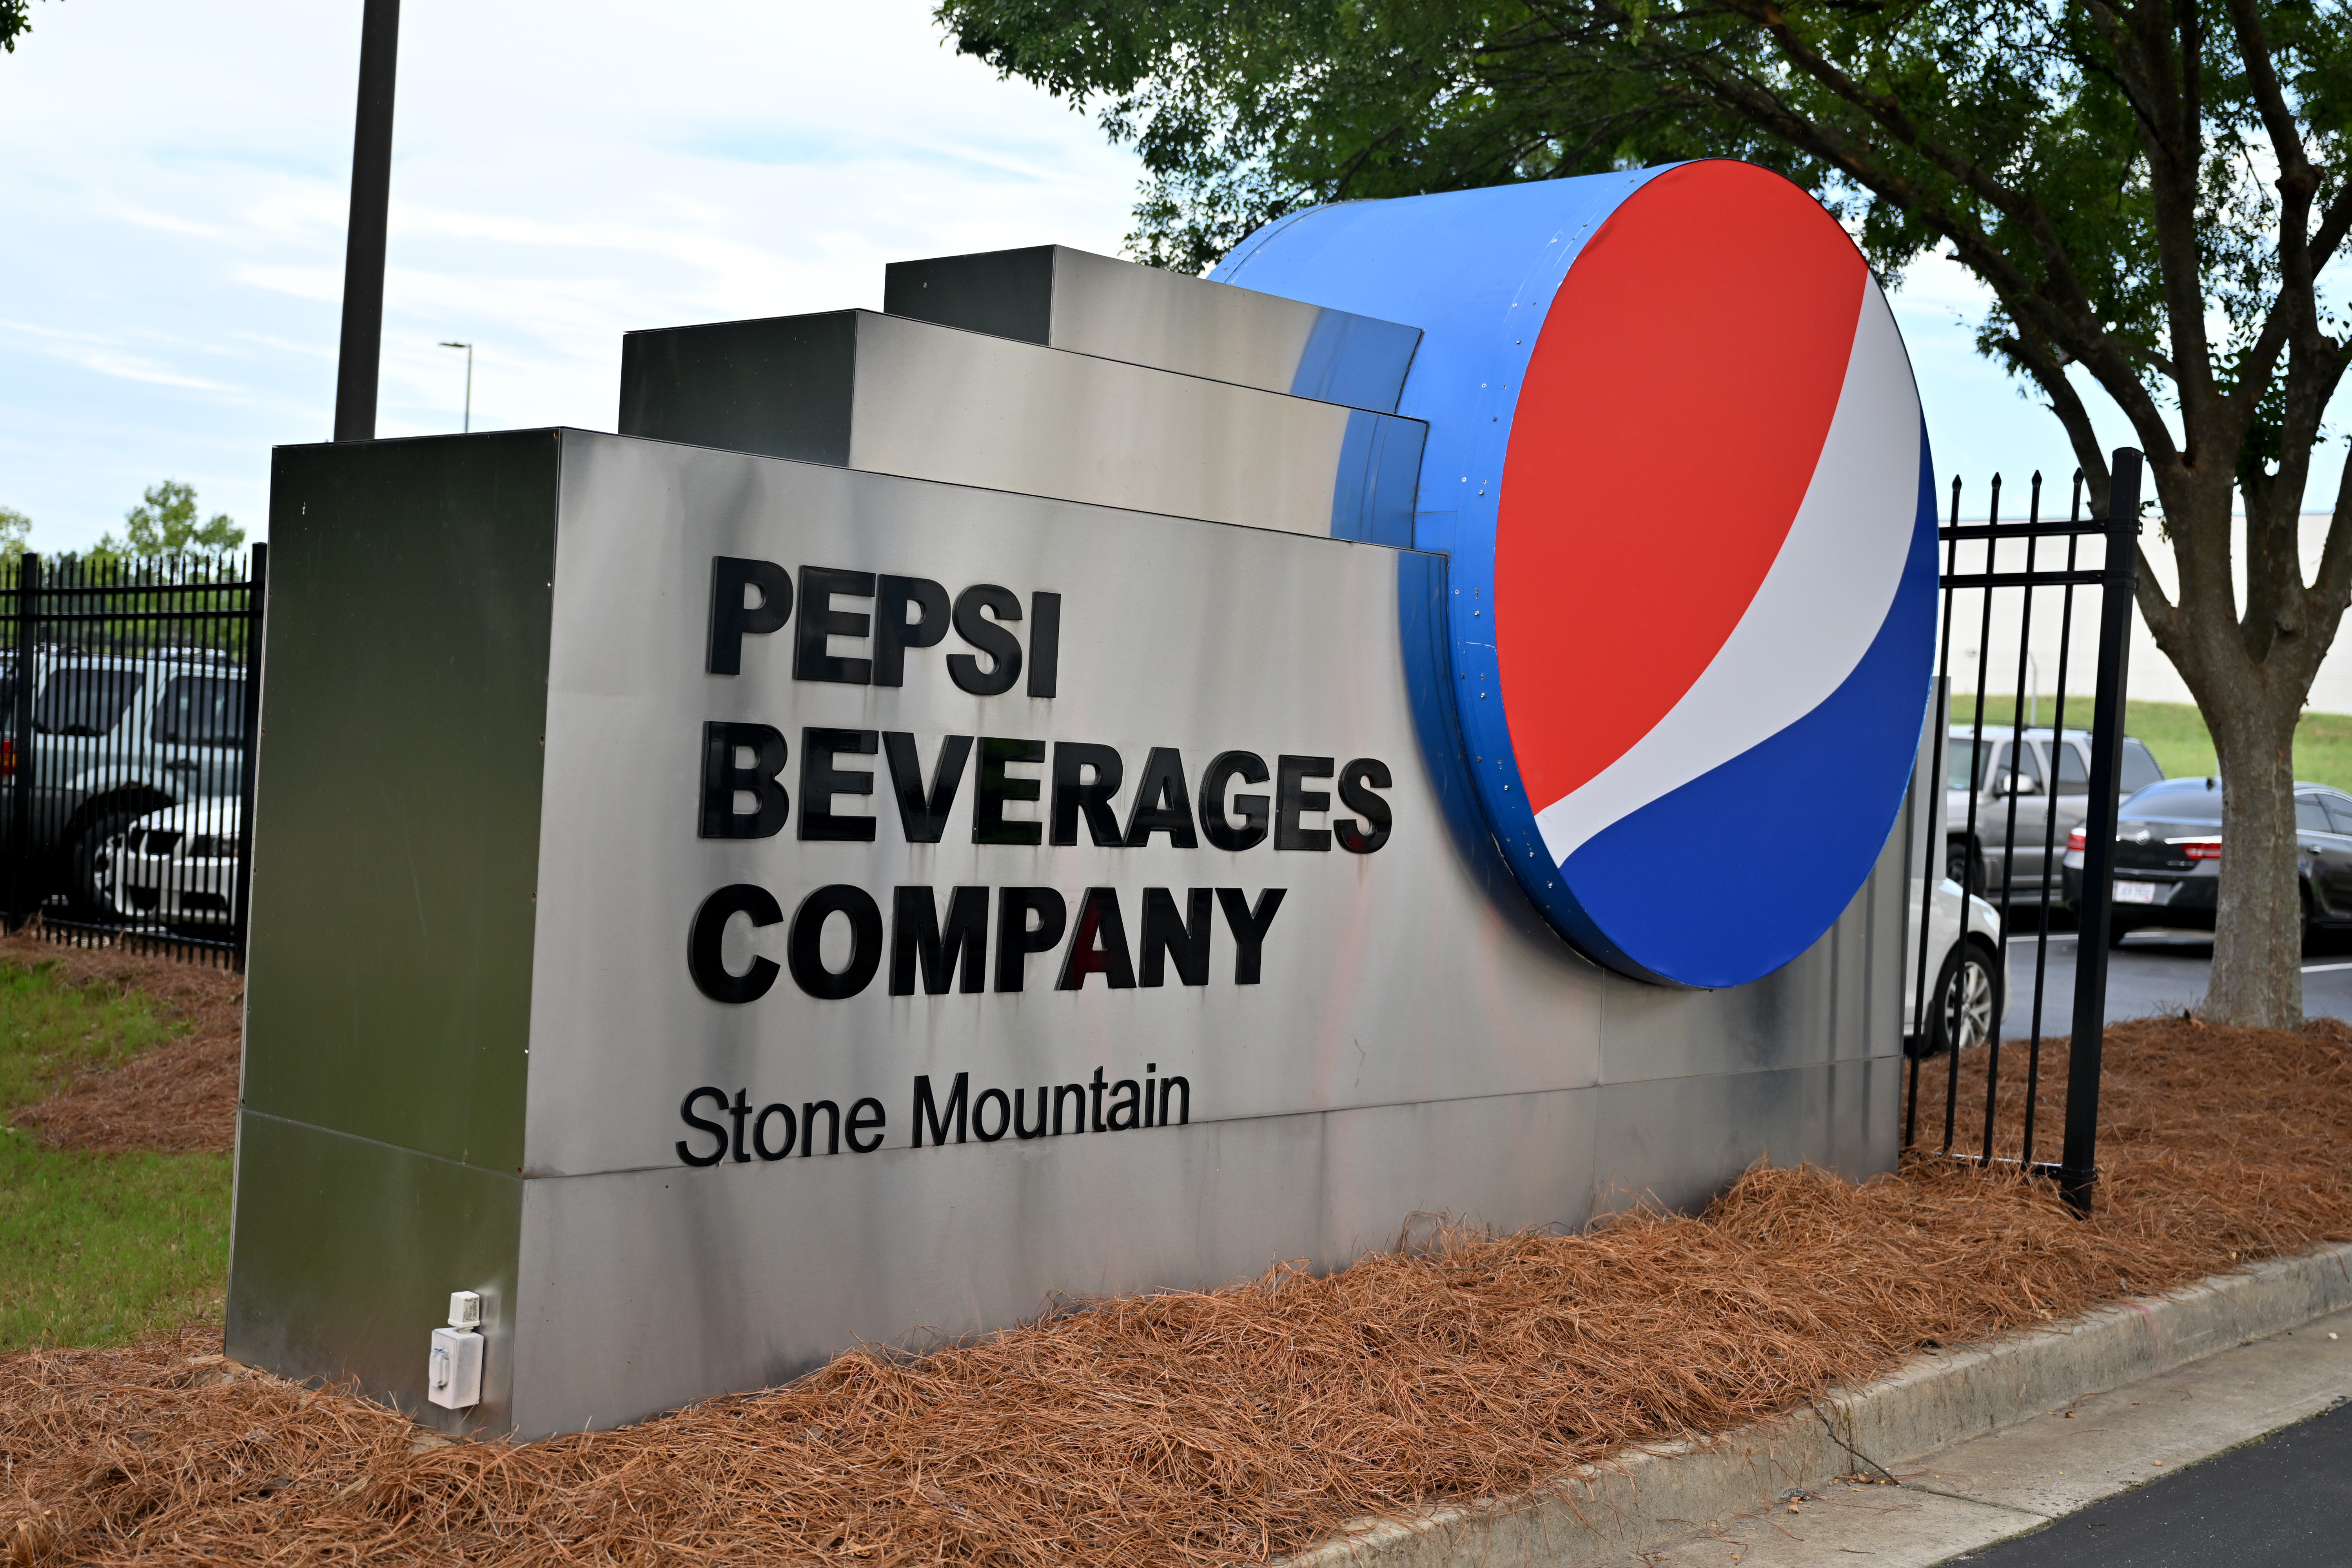 The Pepsi Beverages entrance sign.